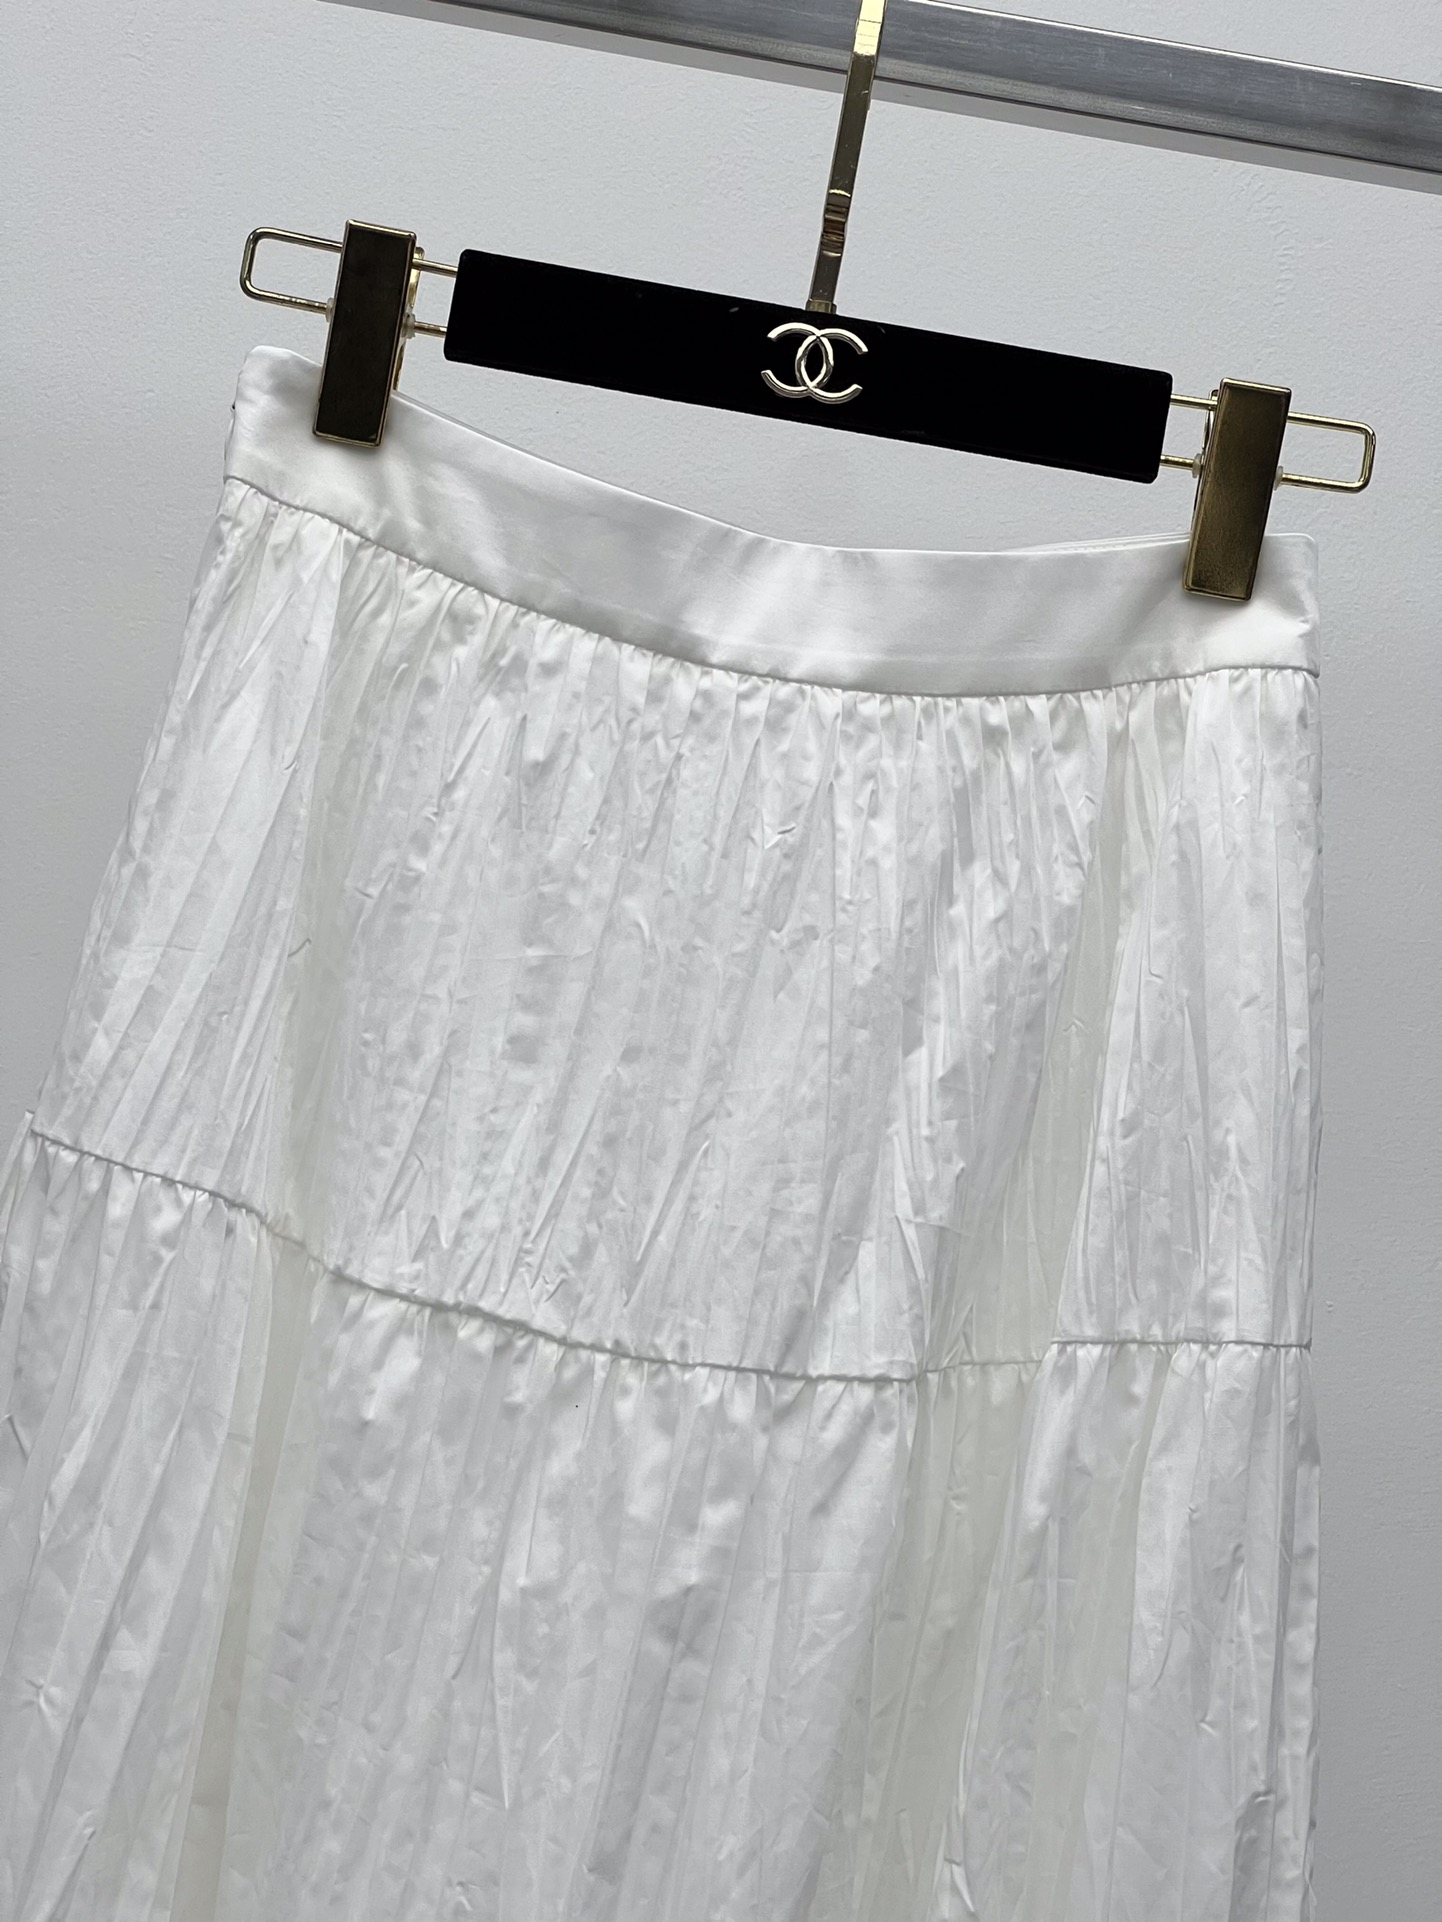 Acler压褶衬衫半裙套装以品牌标志性的褶皱风格为特色布鲁克圆领衬衫宽松版型搭配腰封收腰设计袖口金扣点缀